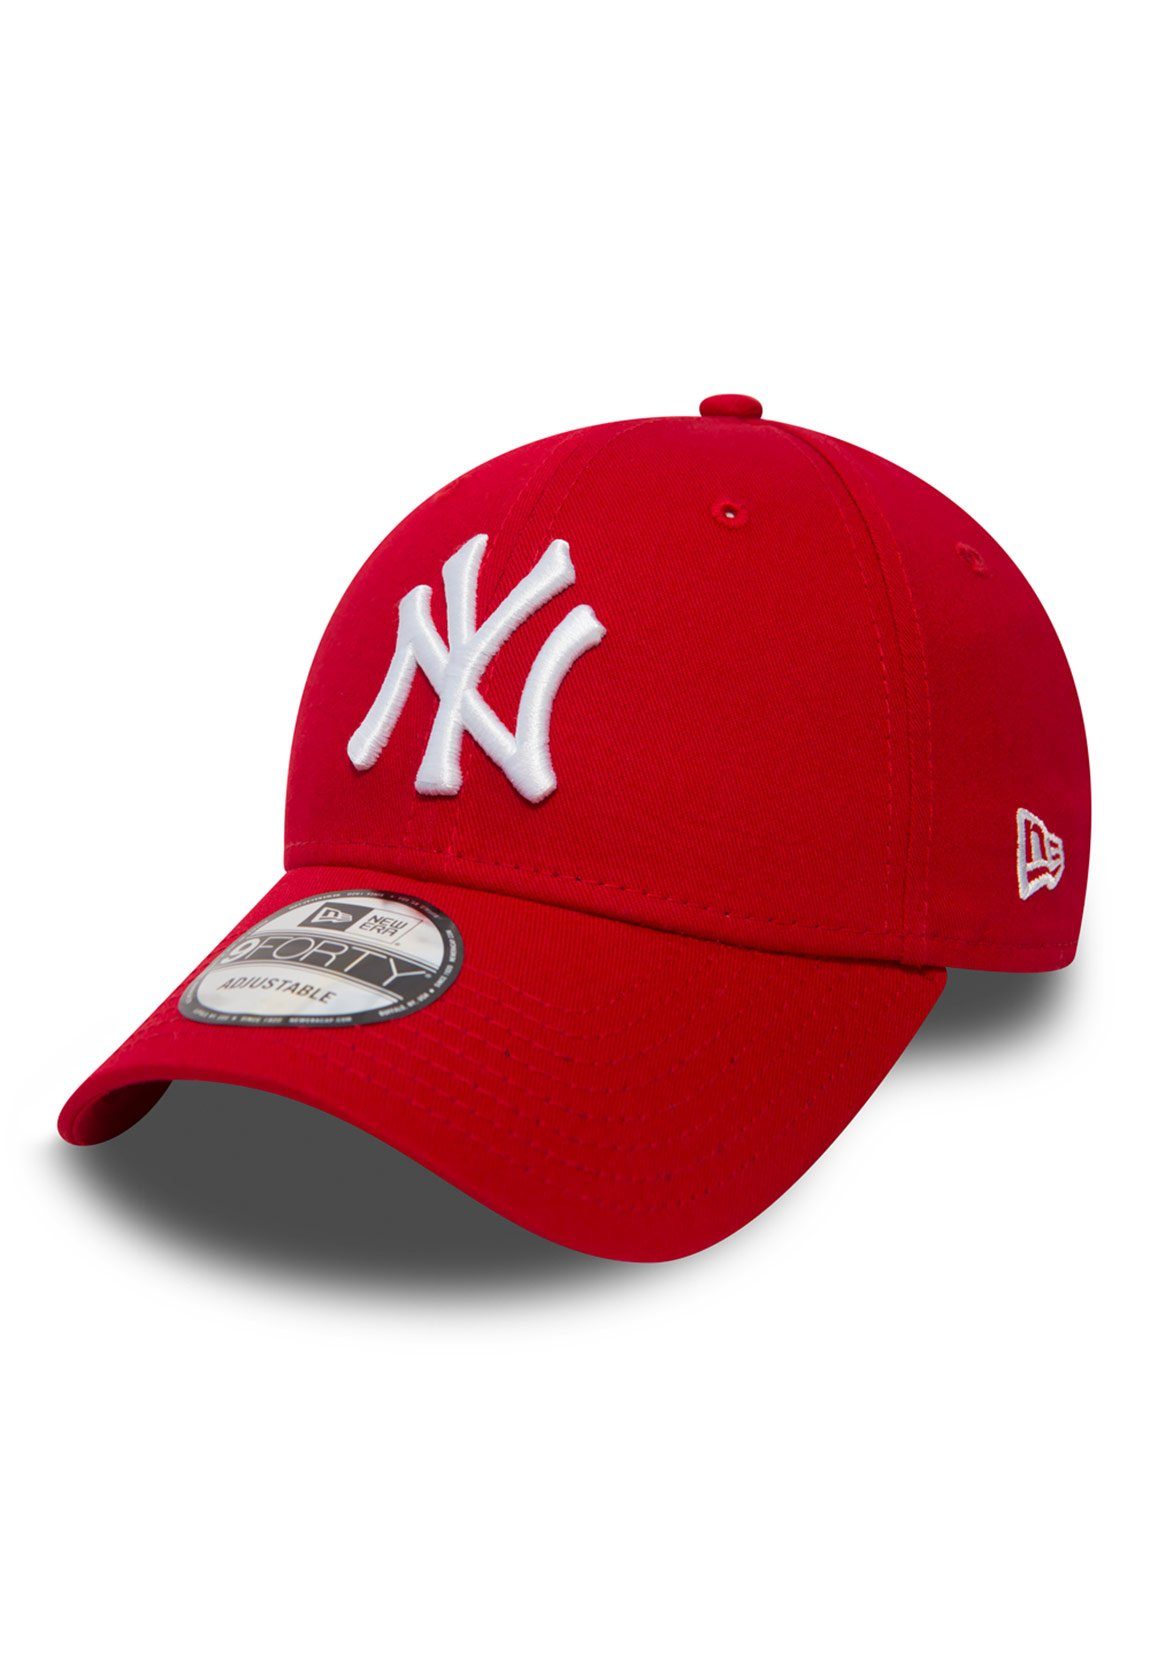 Herren Caps New Era Baseball Cap New Era 9Forty Adjustables - NY YANKEES - Scarlet-White